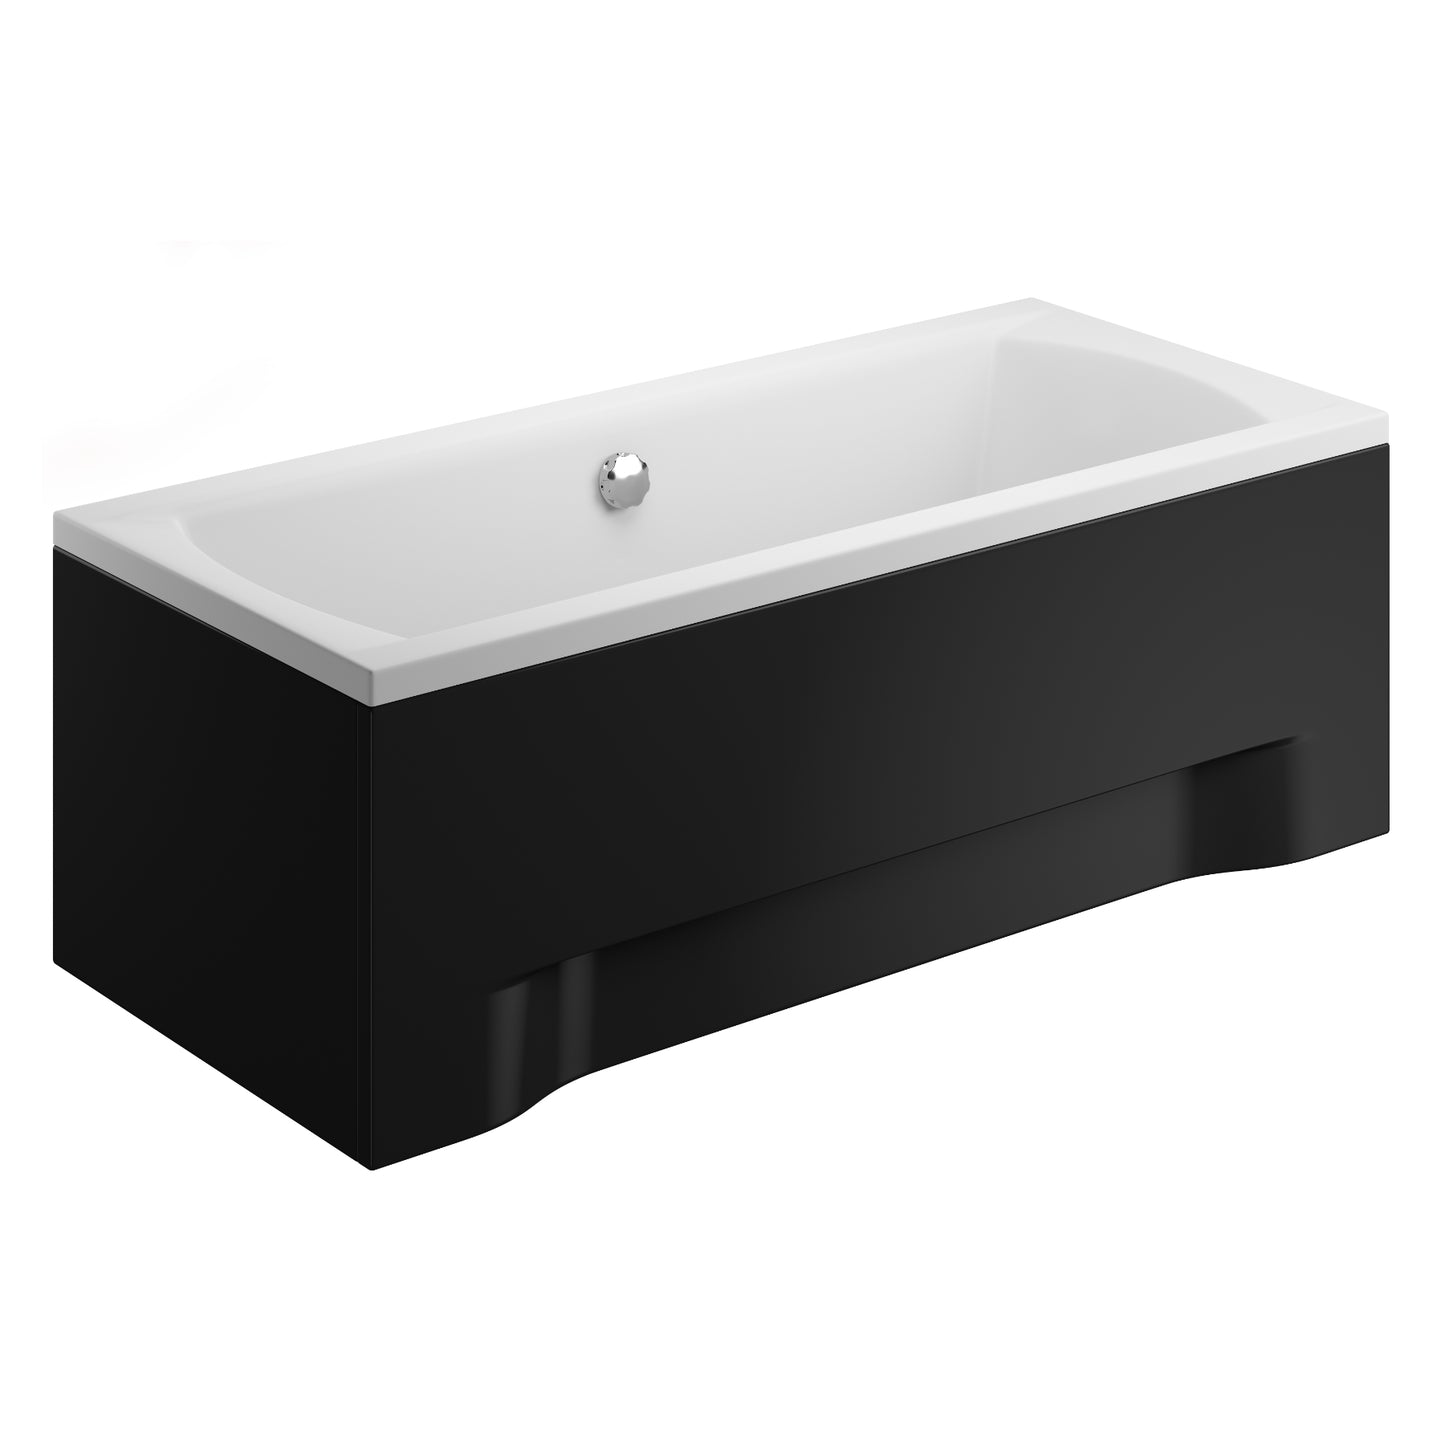 Acrylic rectangular bathtub INES